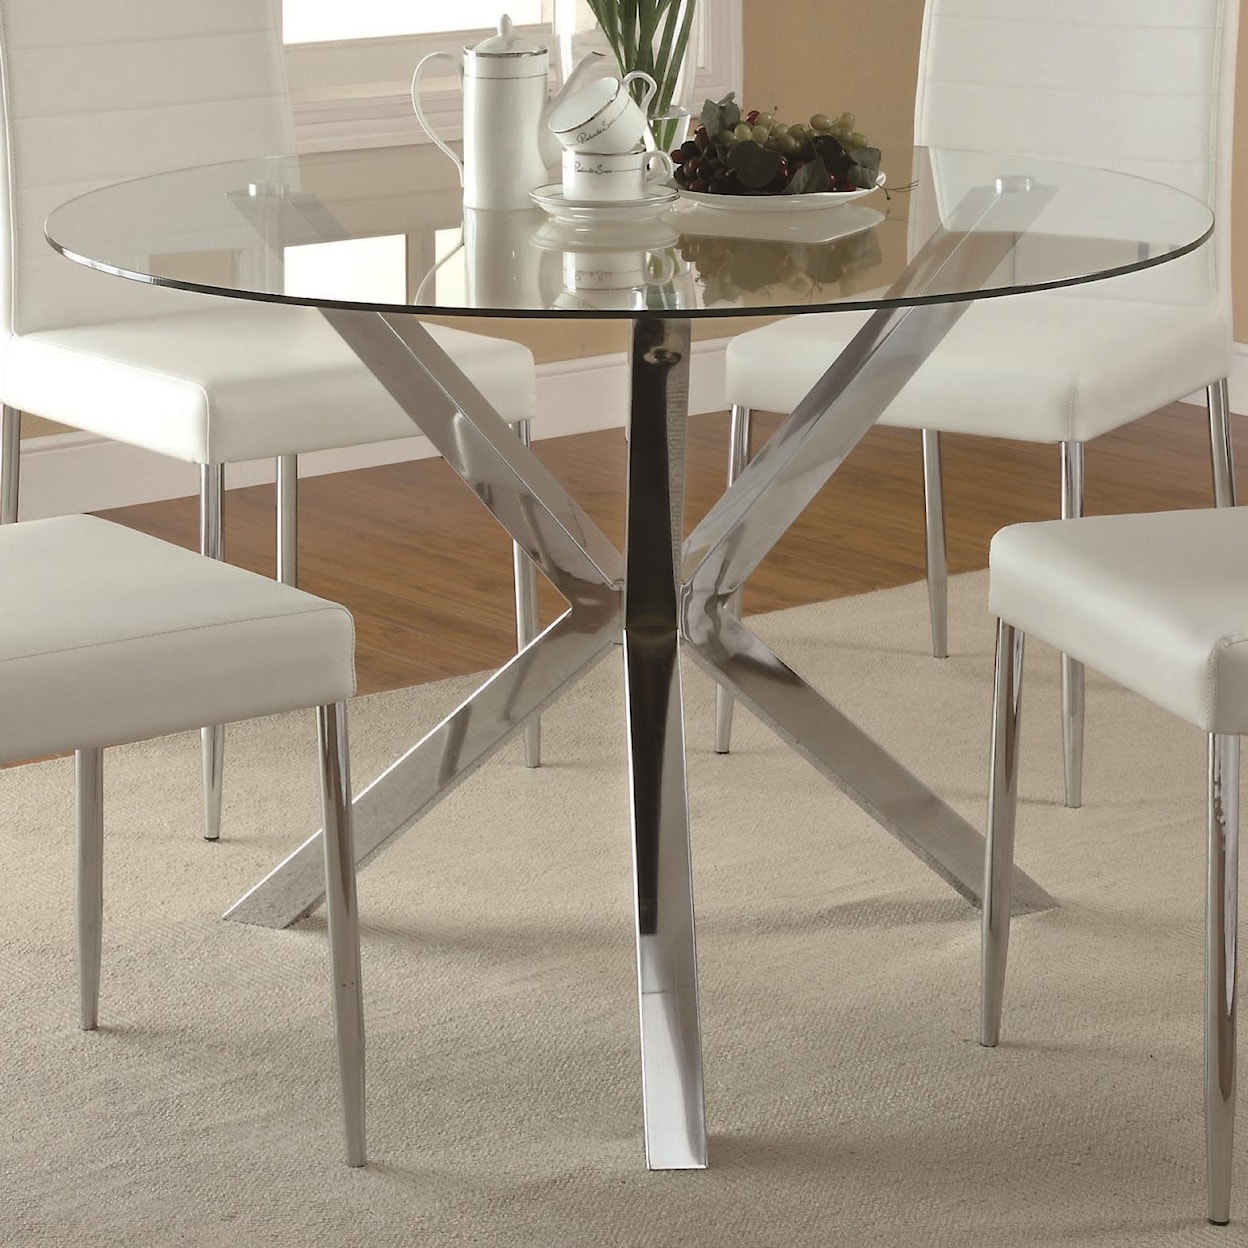 Michael Alan CSR Select Vance 5-Piece Table & Chair Set